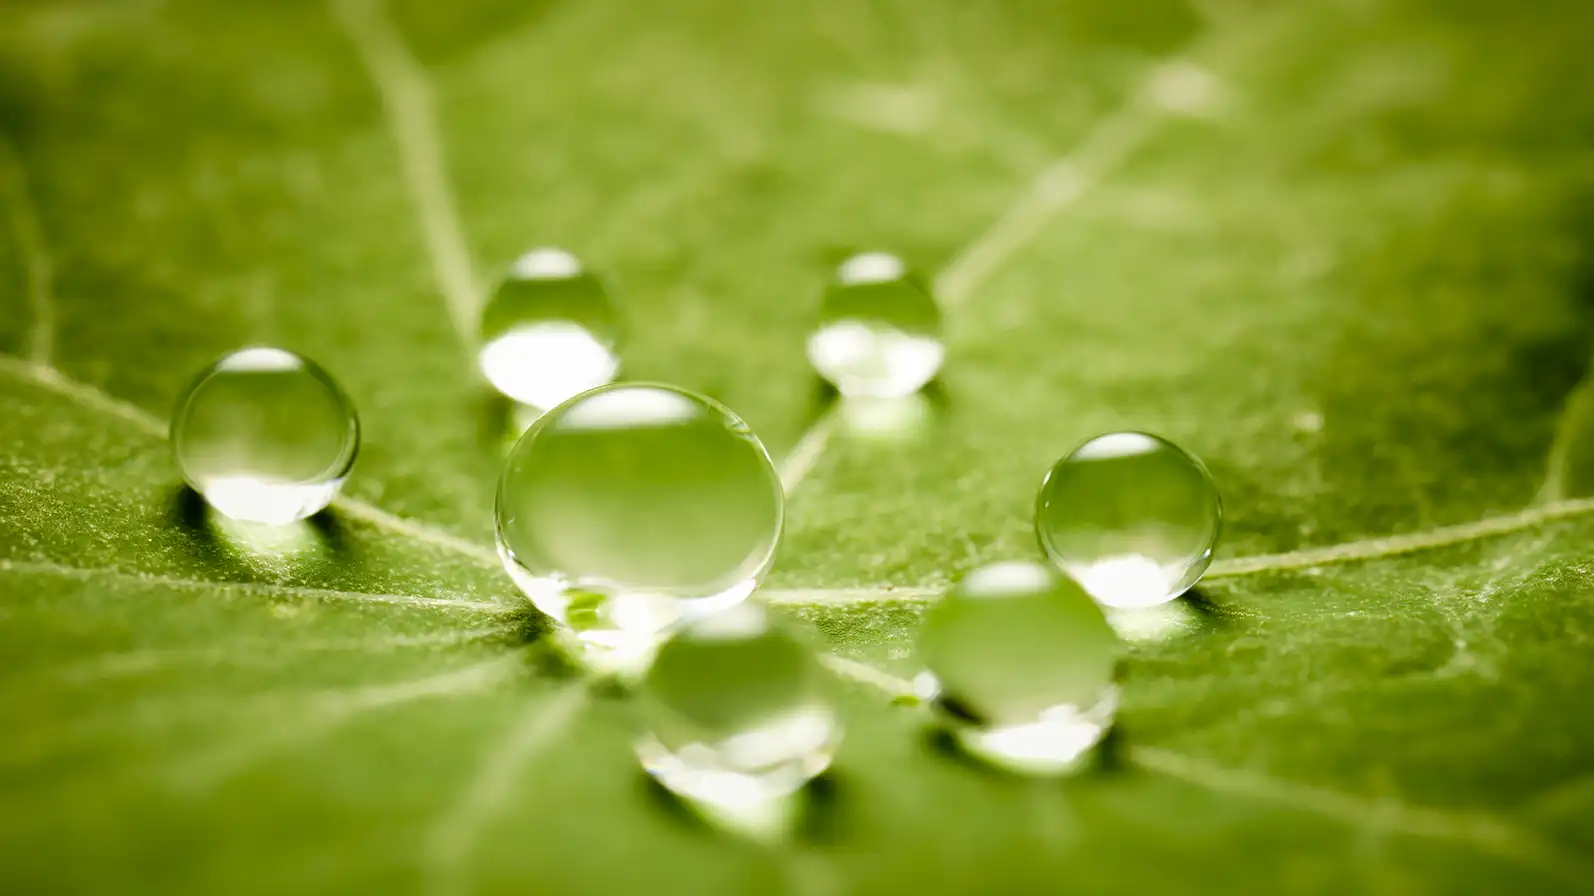 Macro shot of dew drops on a green leaf